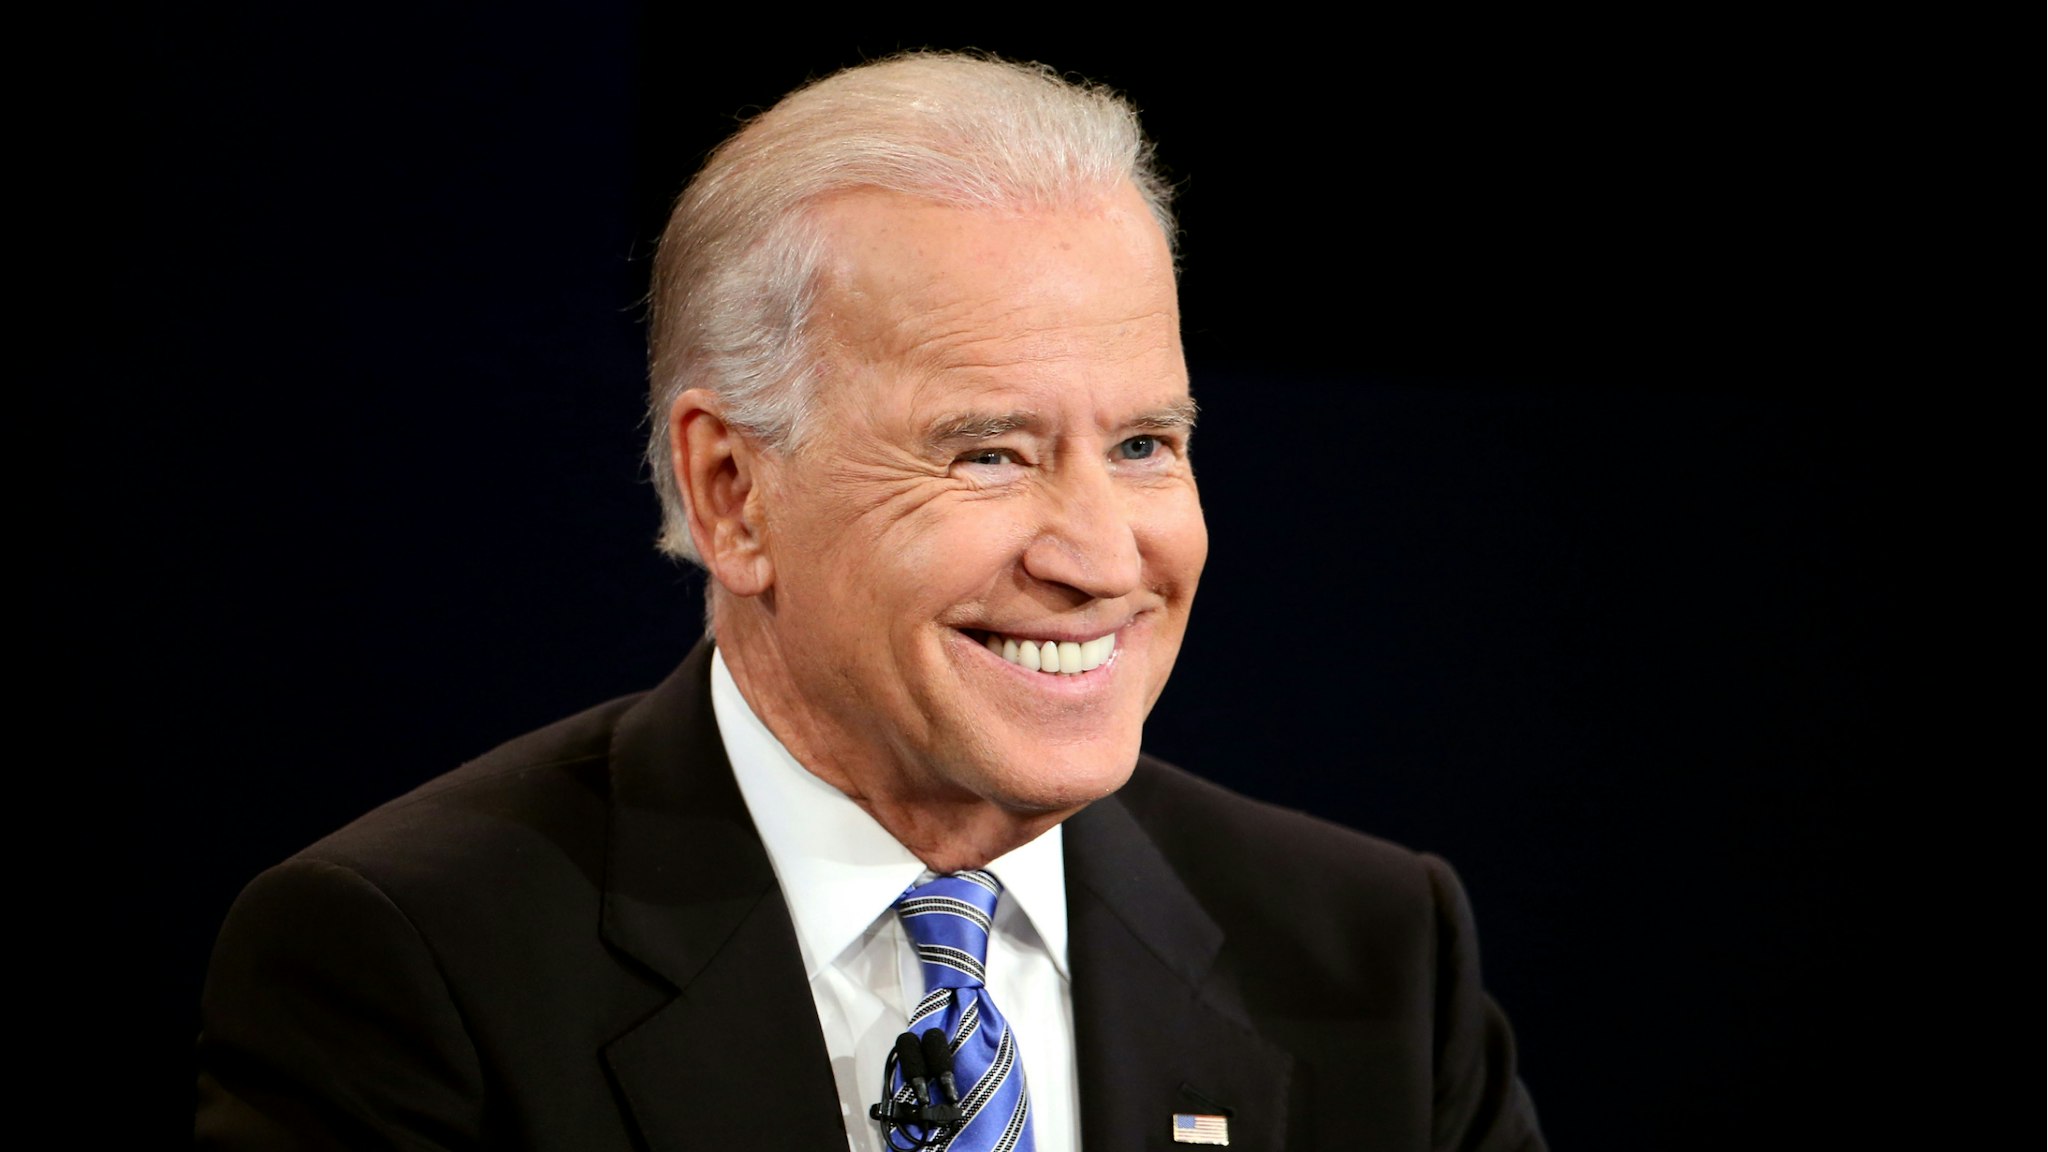 Vice President Joe Biden smiles during the vice presidential debate at Centre College October 11, 2012 in Danville, Kentucky.